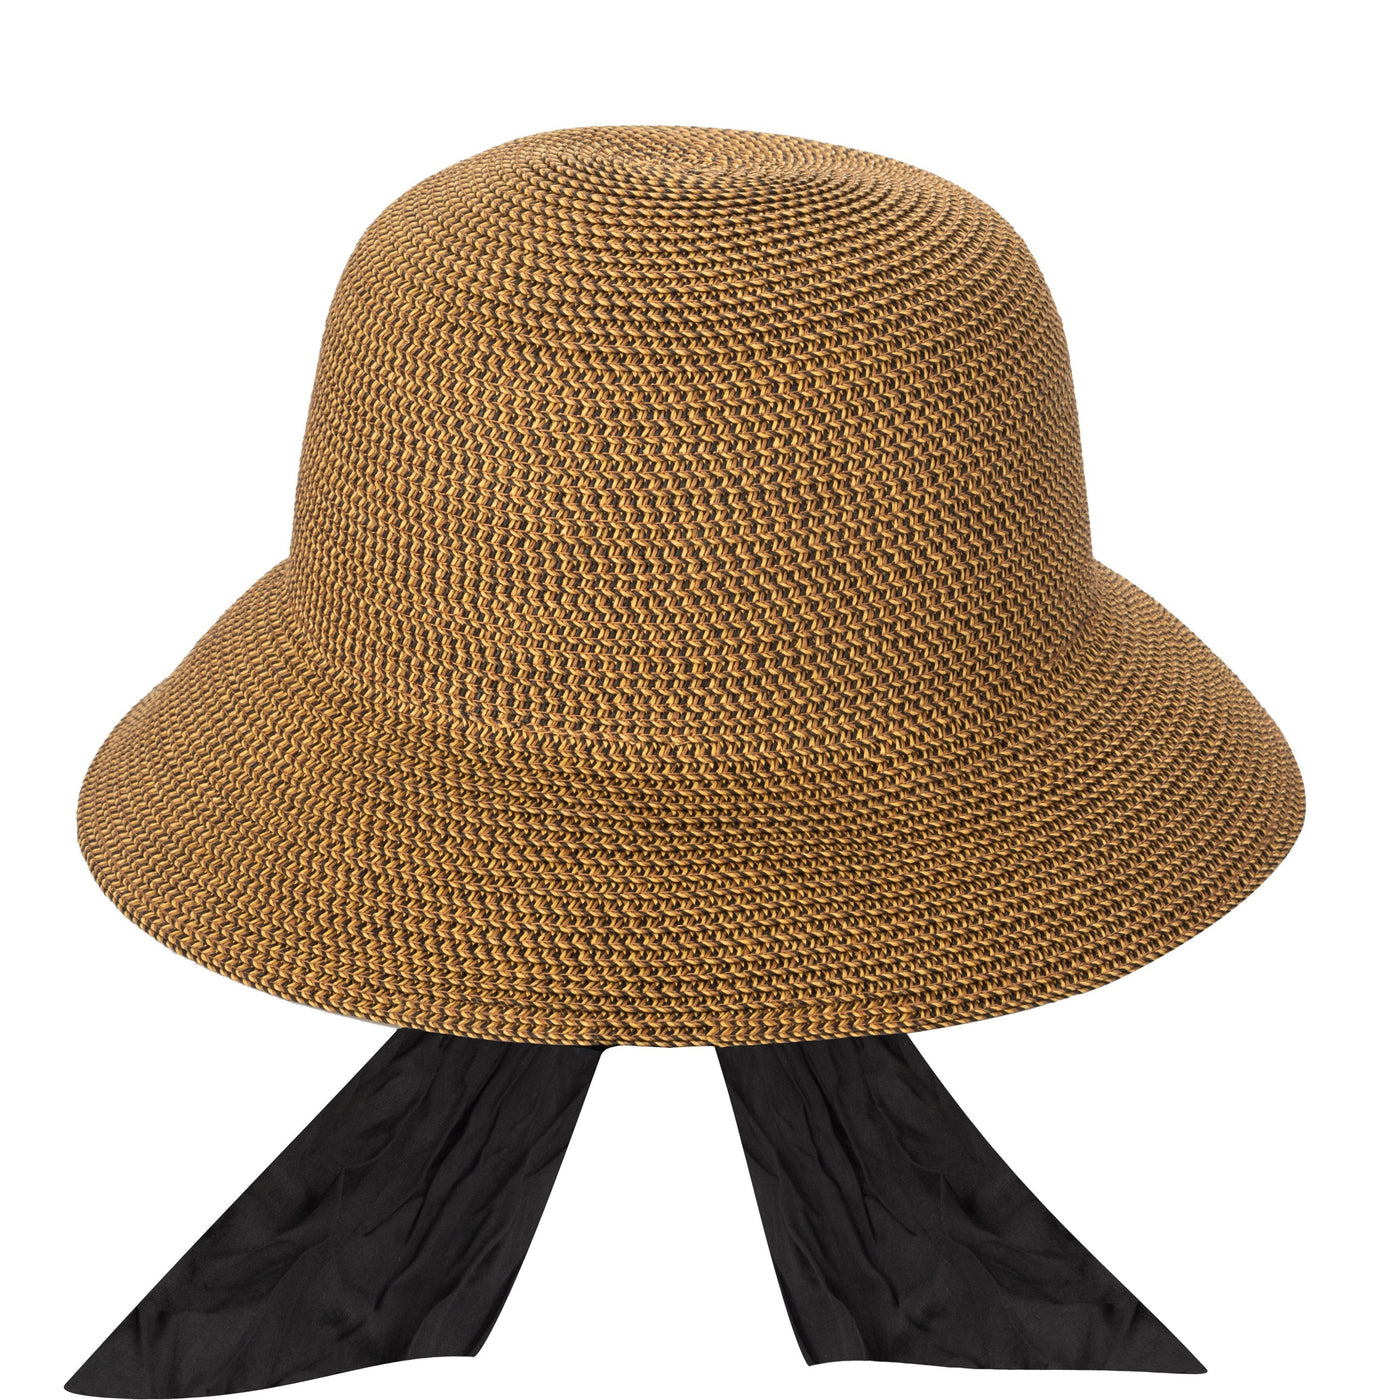 SUN BRIM - Women's Ultrabraid Sun Hat With Facial Scarf Wrap